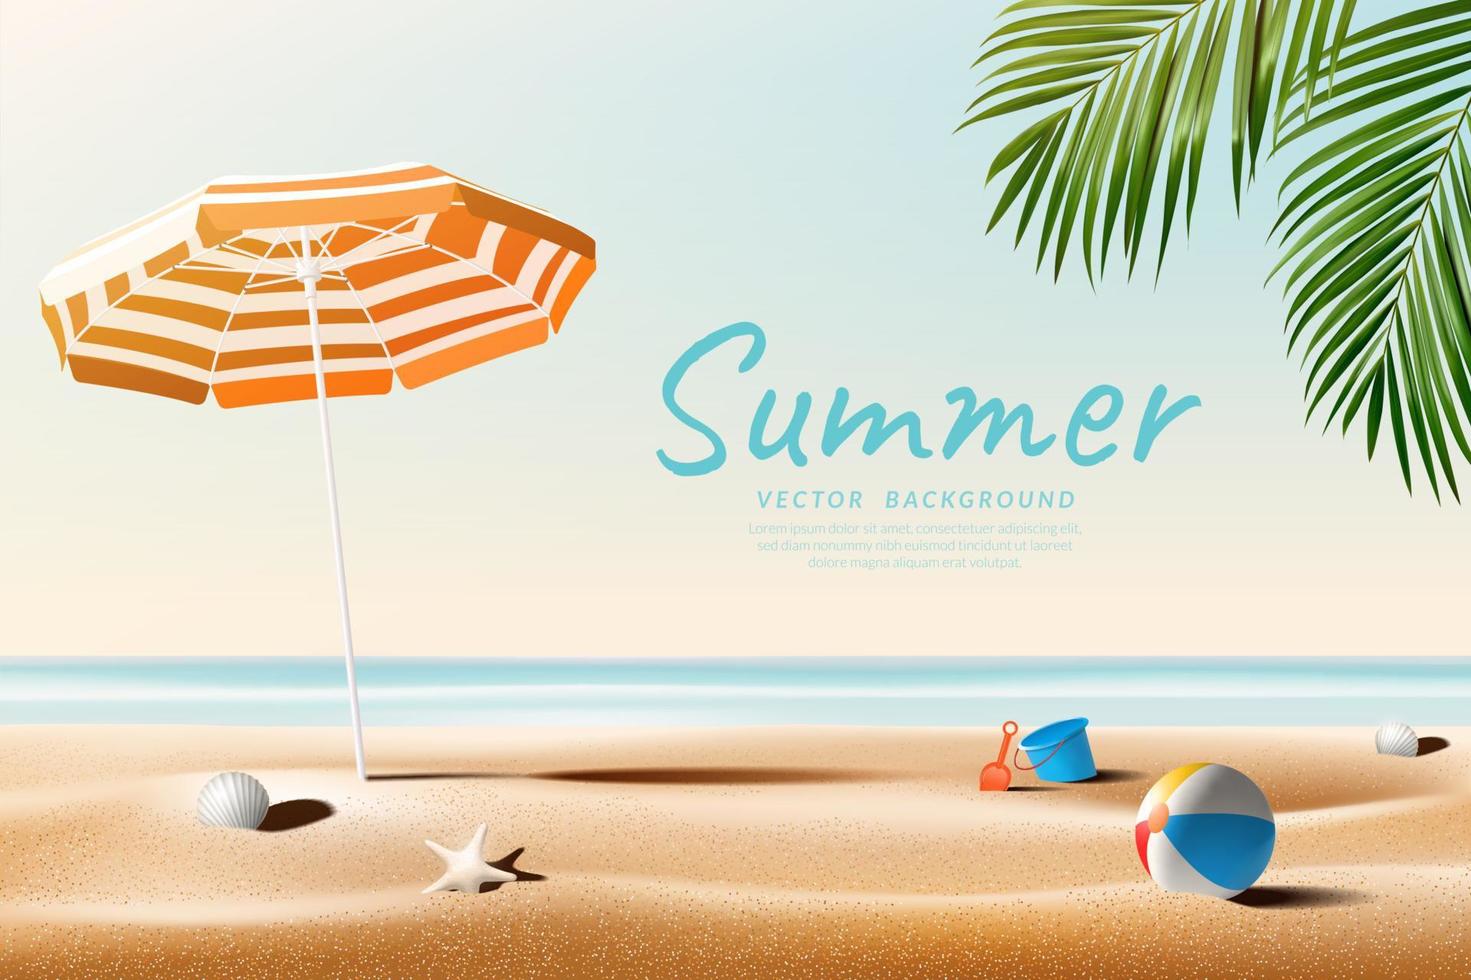 parasol met strandaccessoires overdag. zomer buitenconcept. vector illustratie